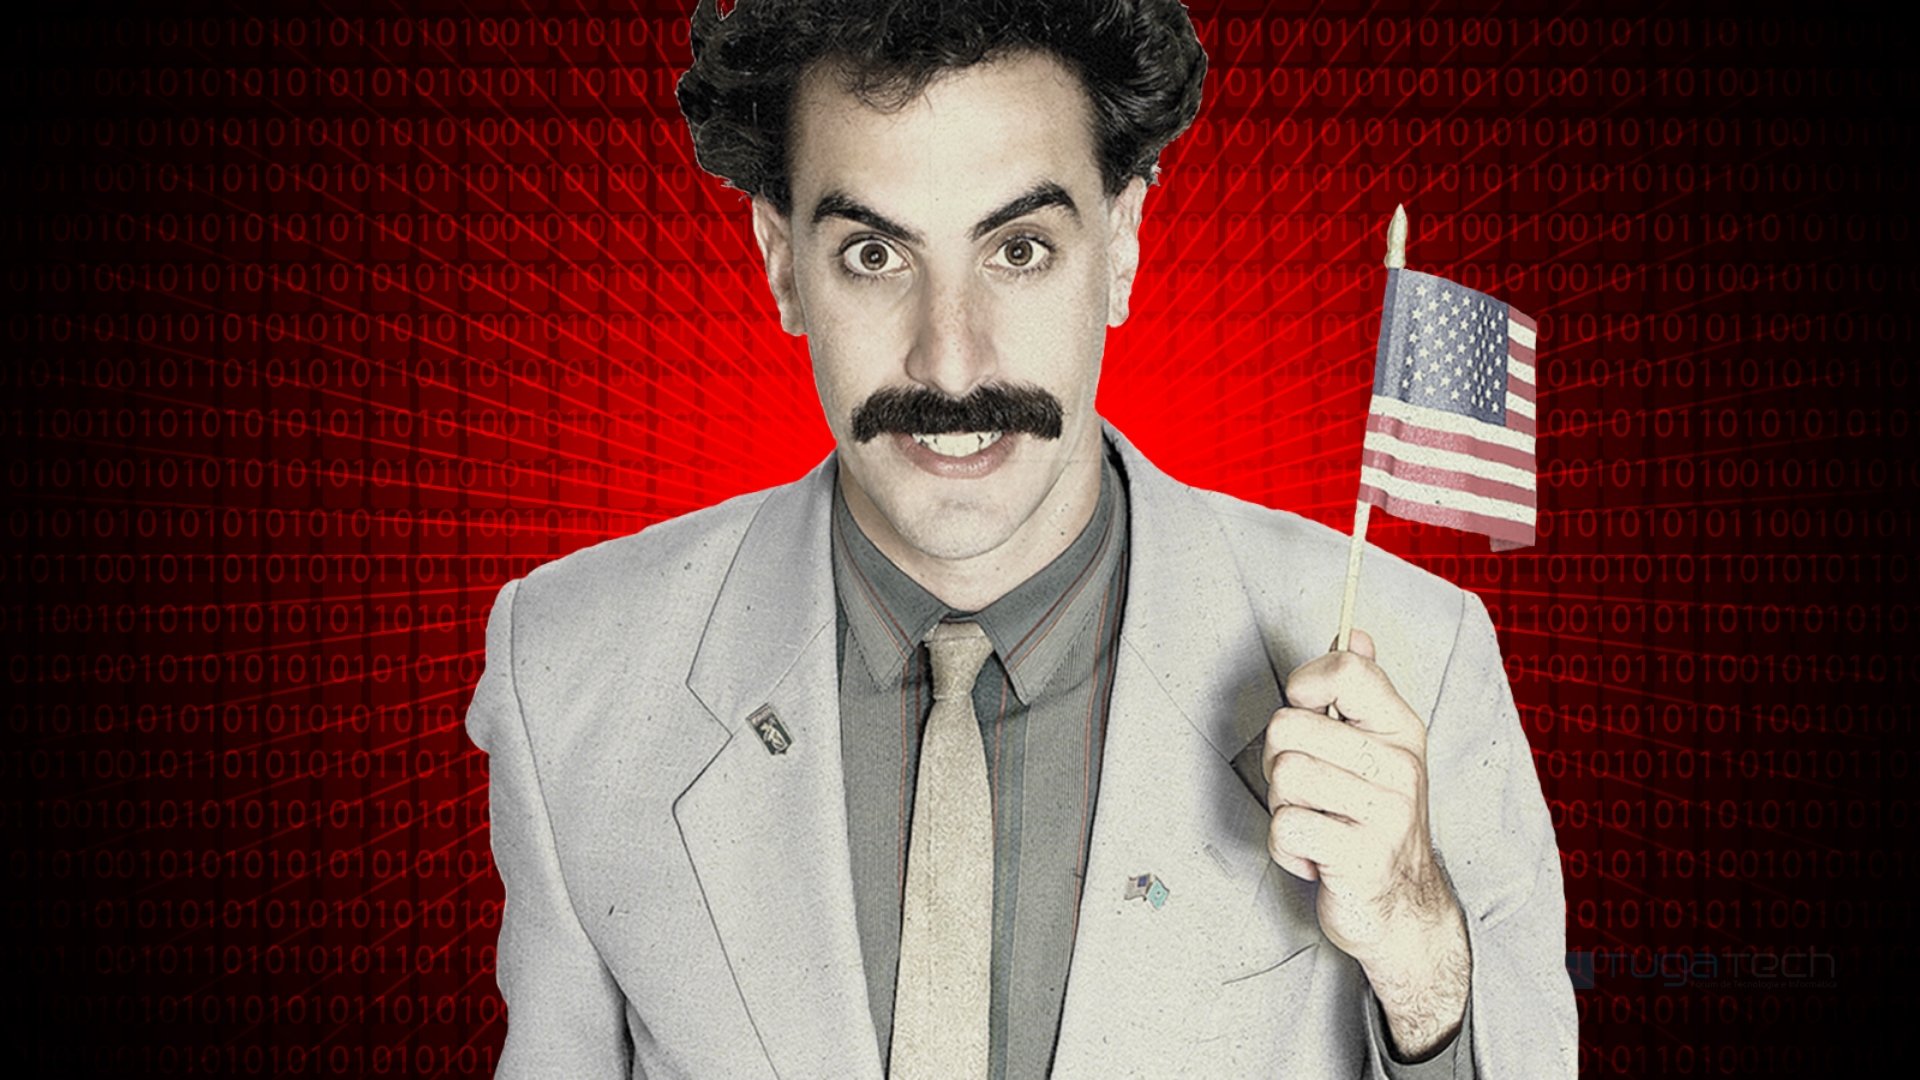 Borat malware